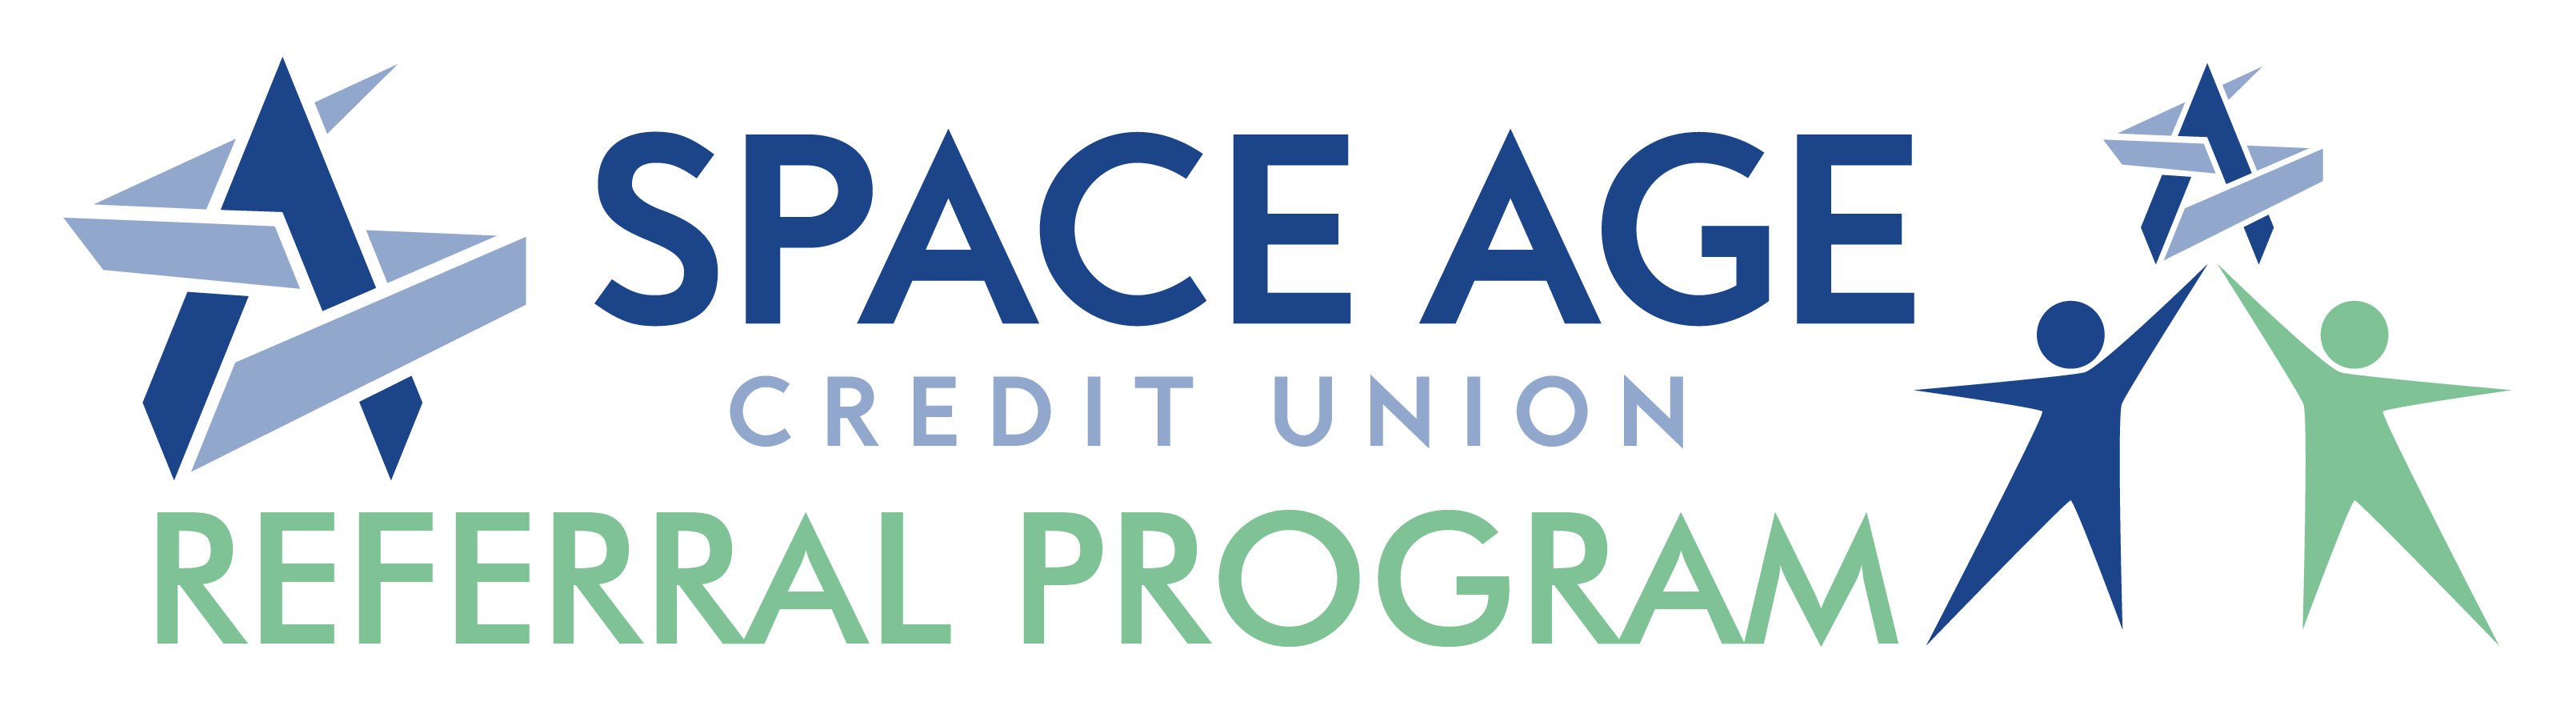 Space Age Credit Union. Referral Program